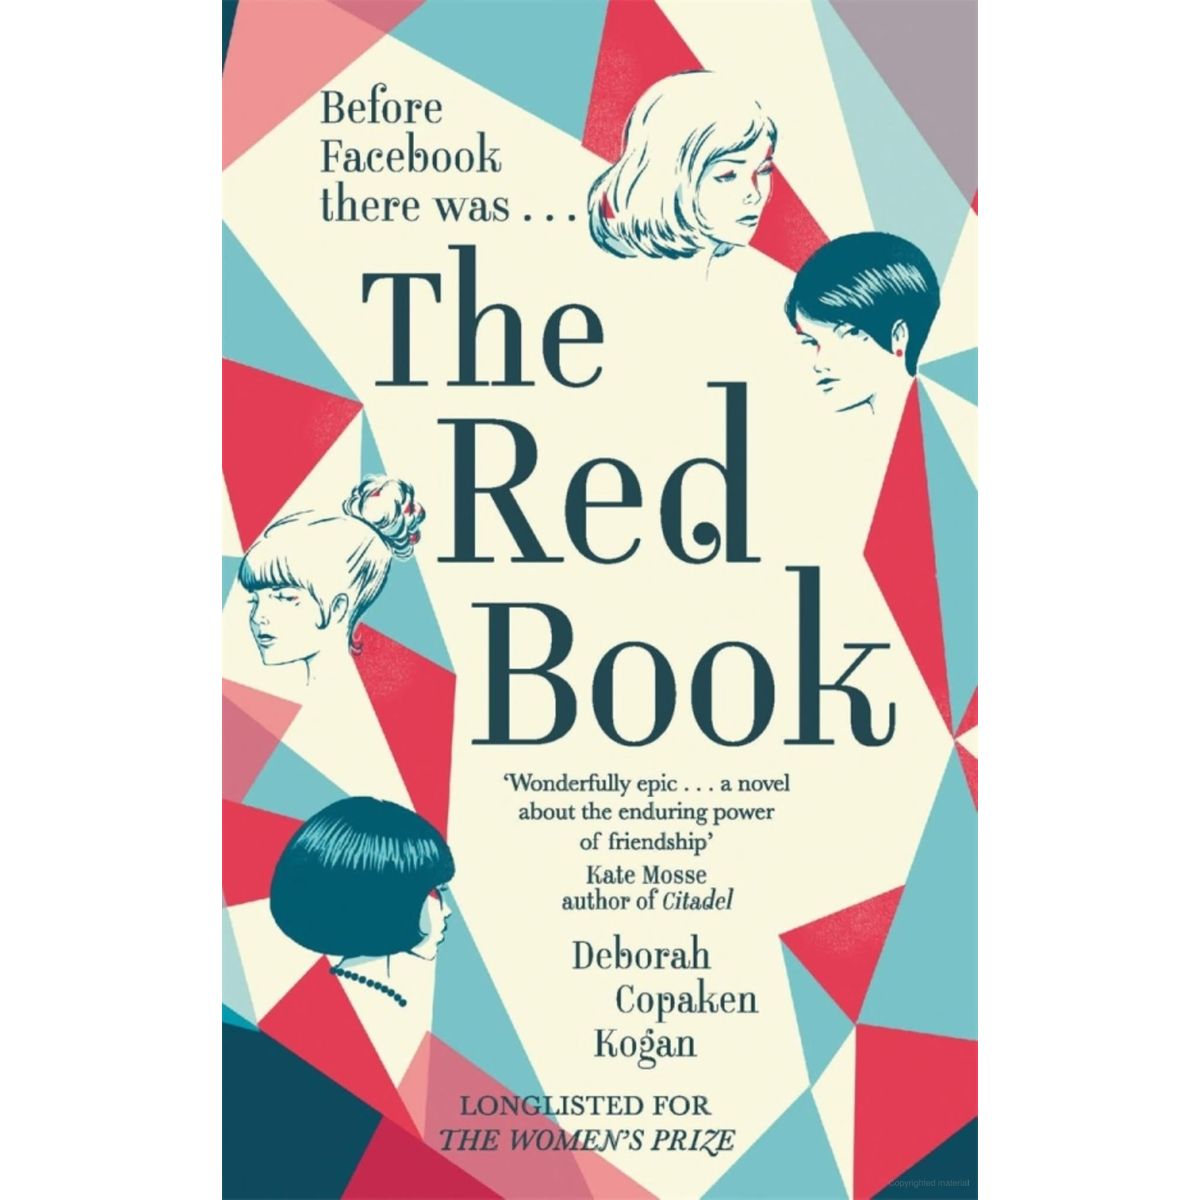 ISBN: 9781844089017 / 1844089010 - The Red Book by Deborah Copaken Kogan [2012]